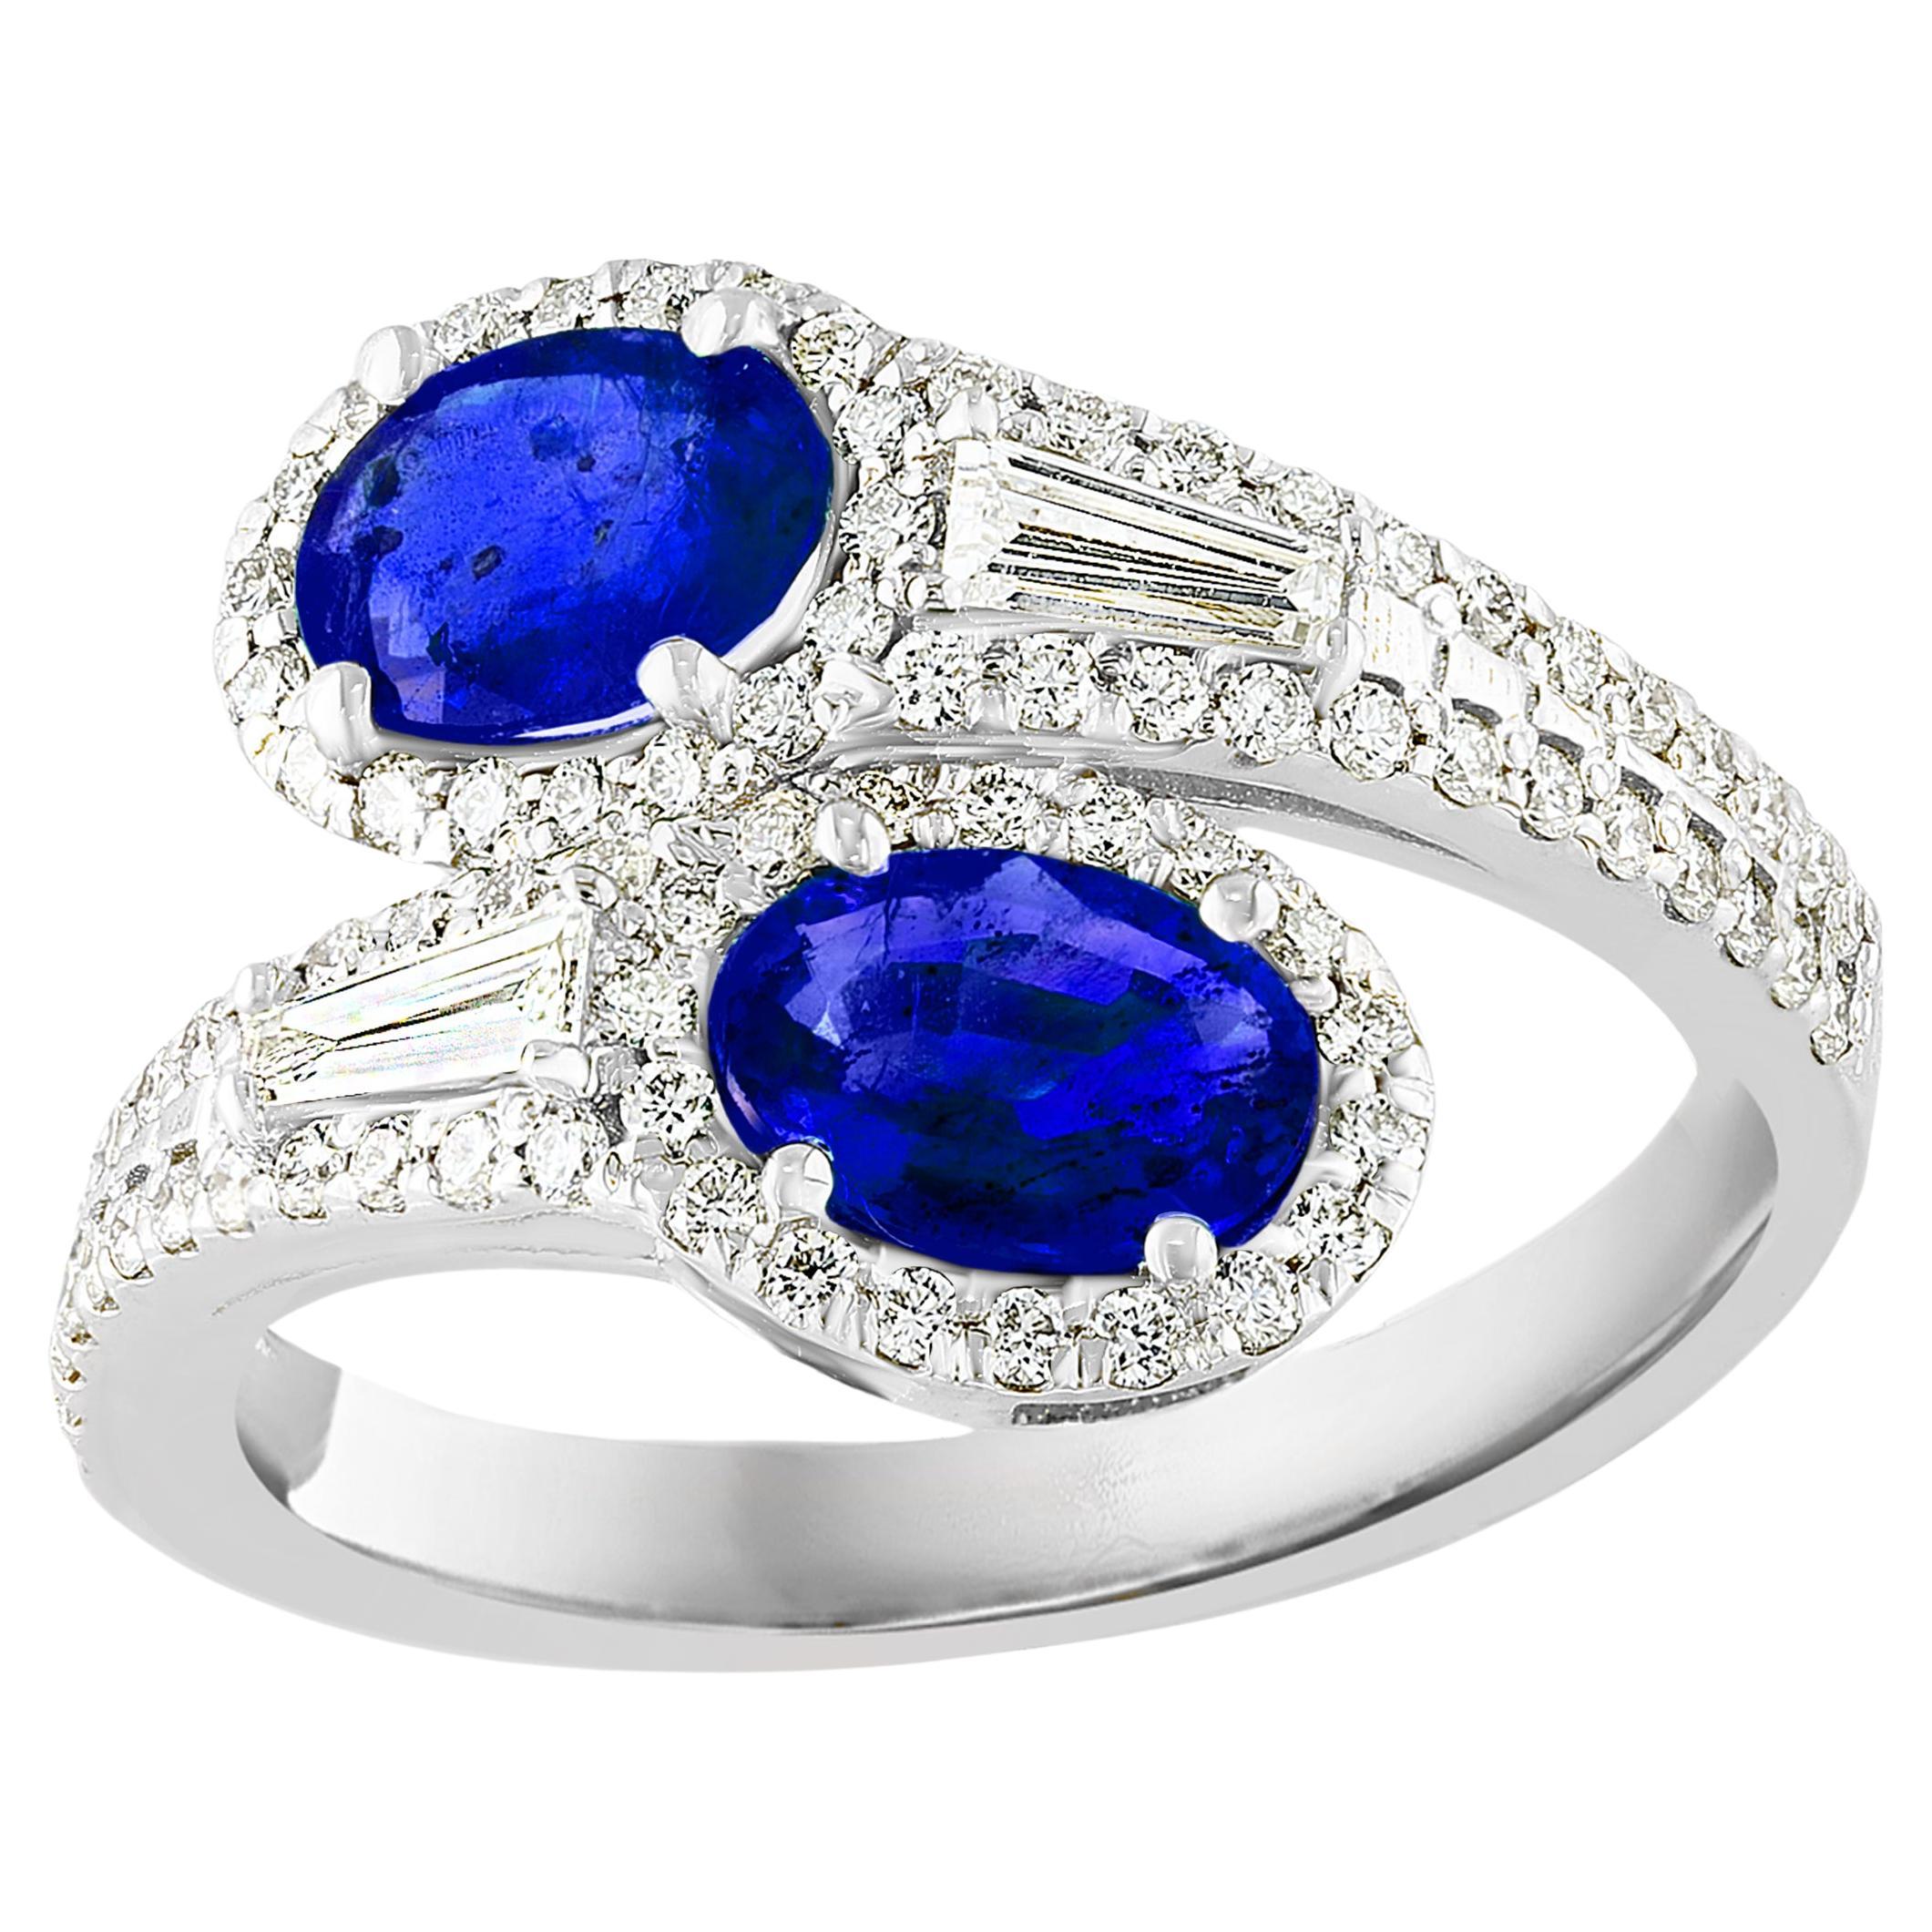 1.81 Carat Oval Cut Sapphire Diamond Toi Et Moi Engagement Ring 14K White Gold For Sale